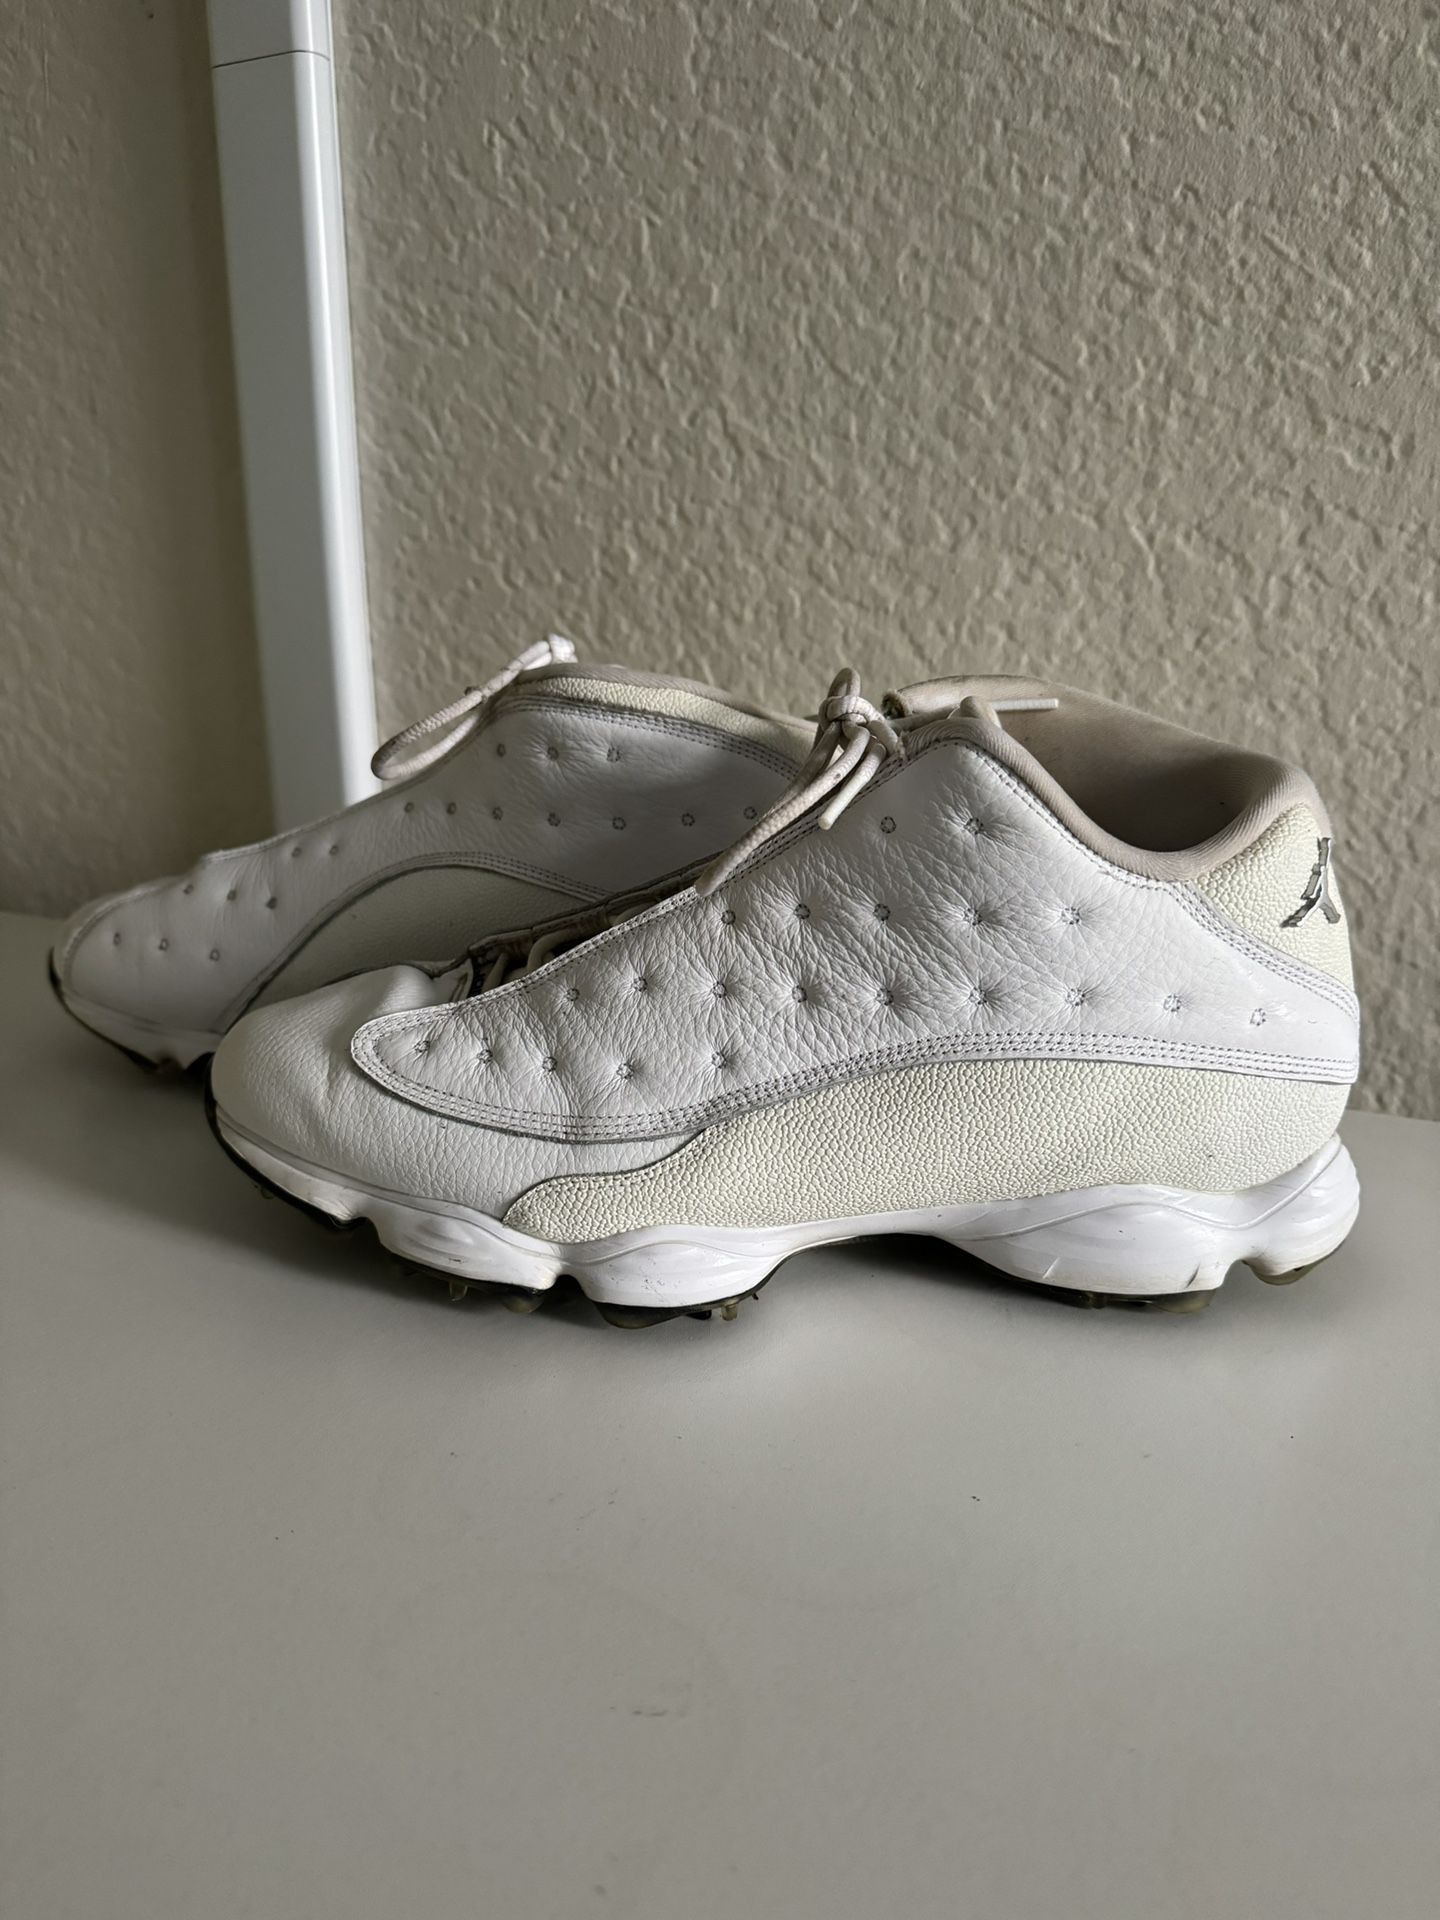 RARE Jordan 13 White Golf Shoes 11.5